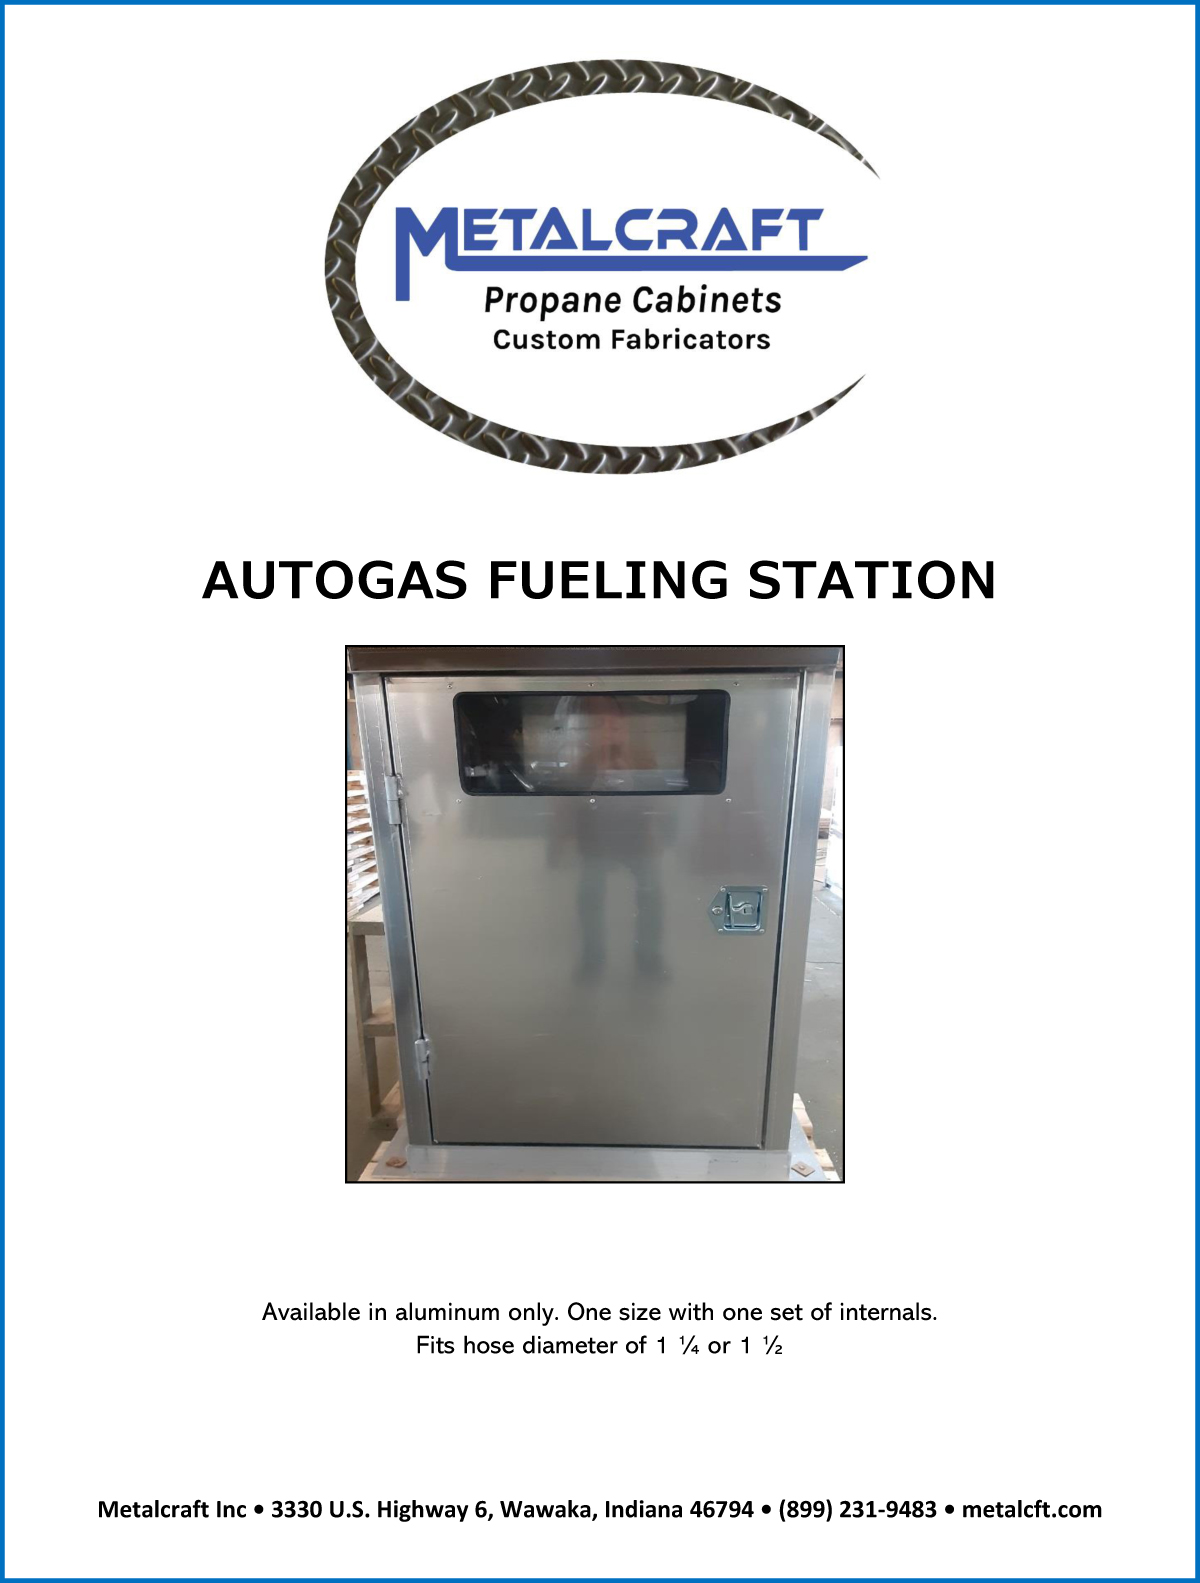 Metalcraft Profile Sheet - Autogas